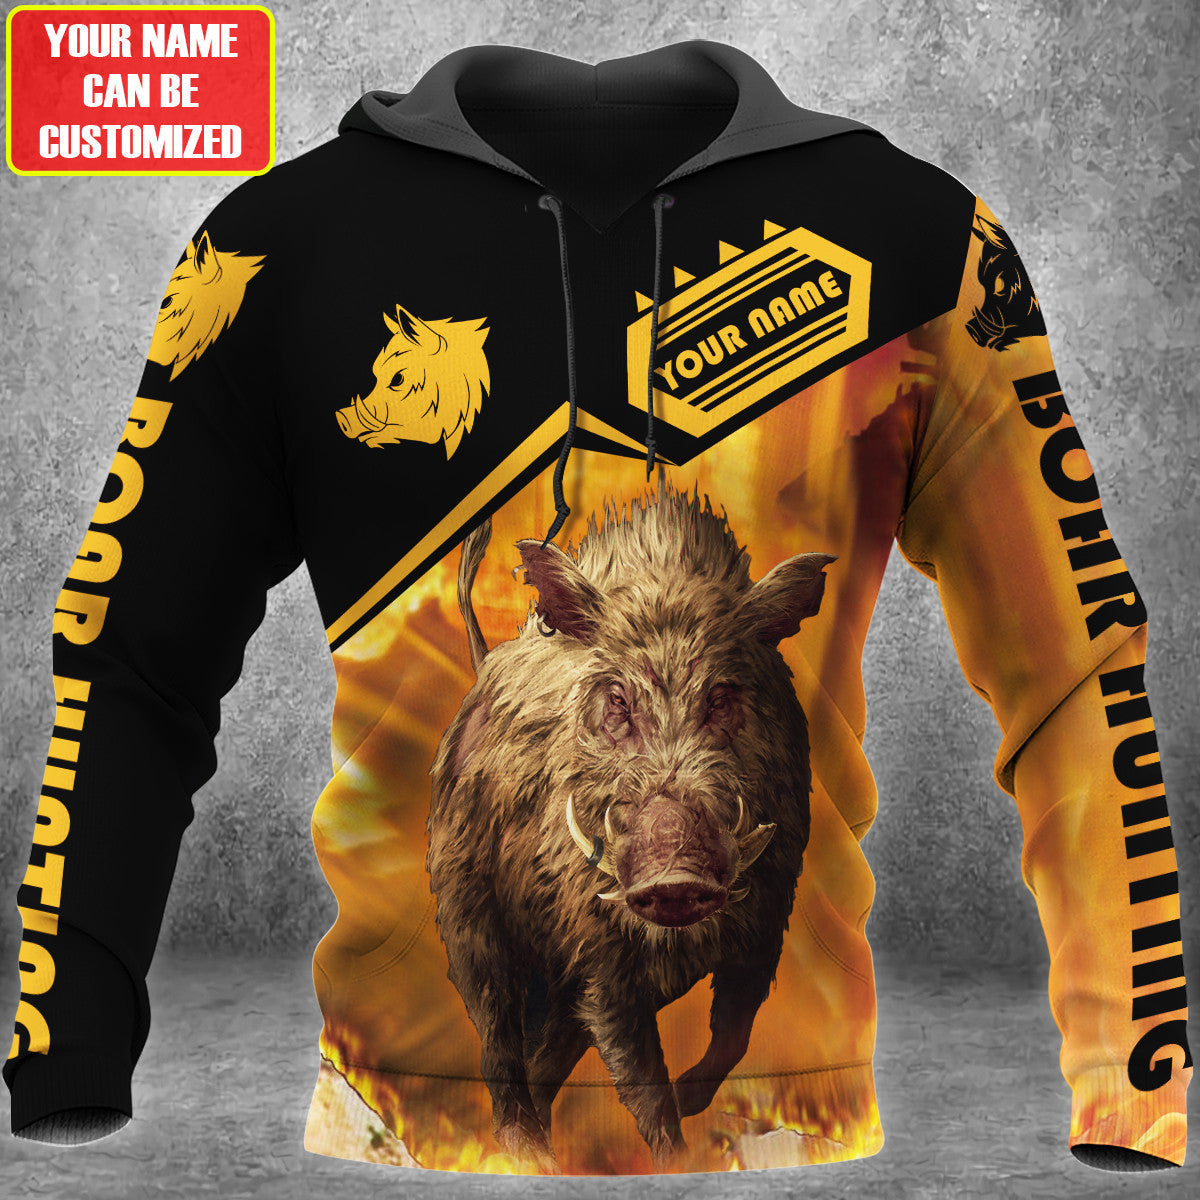 Customized Name Boar Hunting 3D Hoodie Shirt/ Boar Hunting Shirt for Men